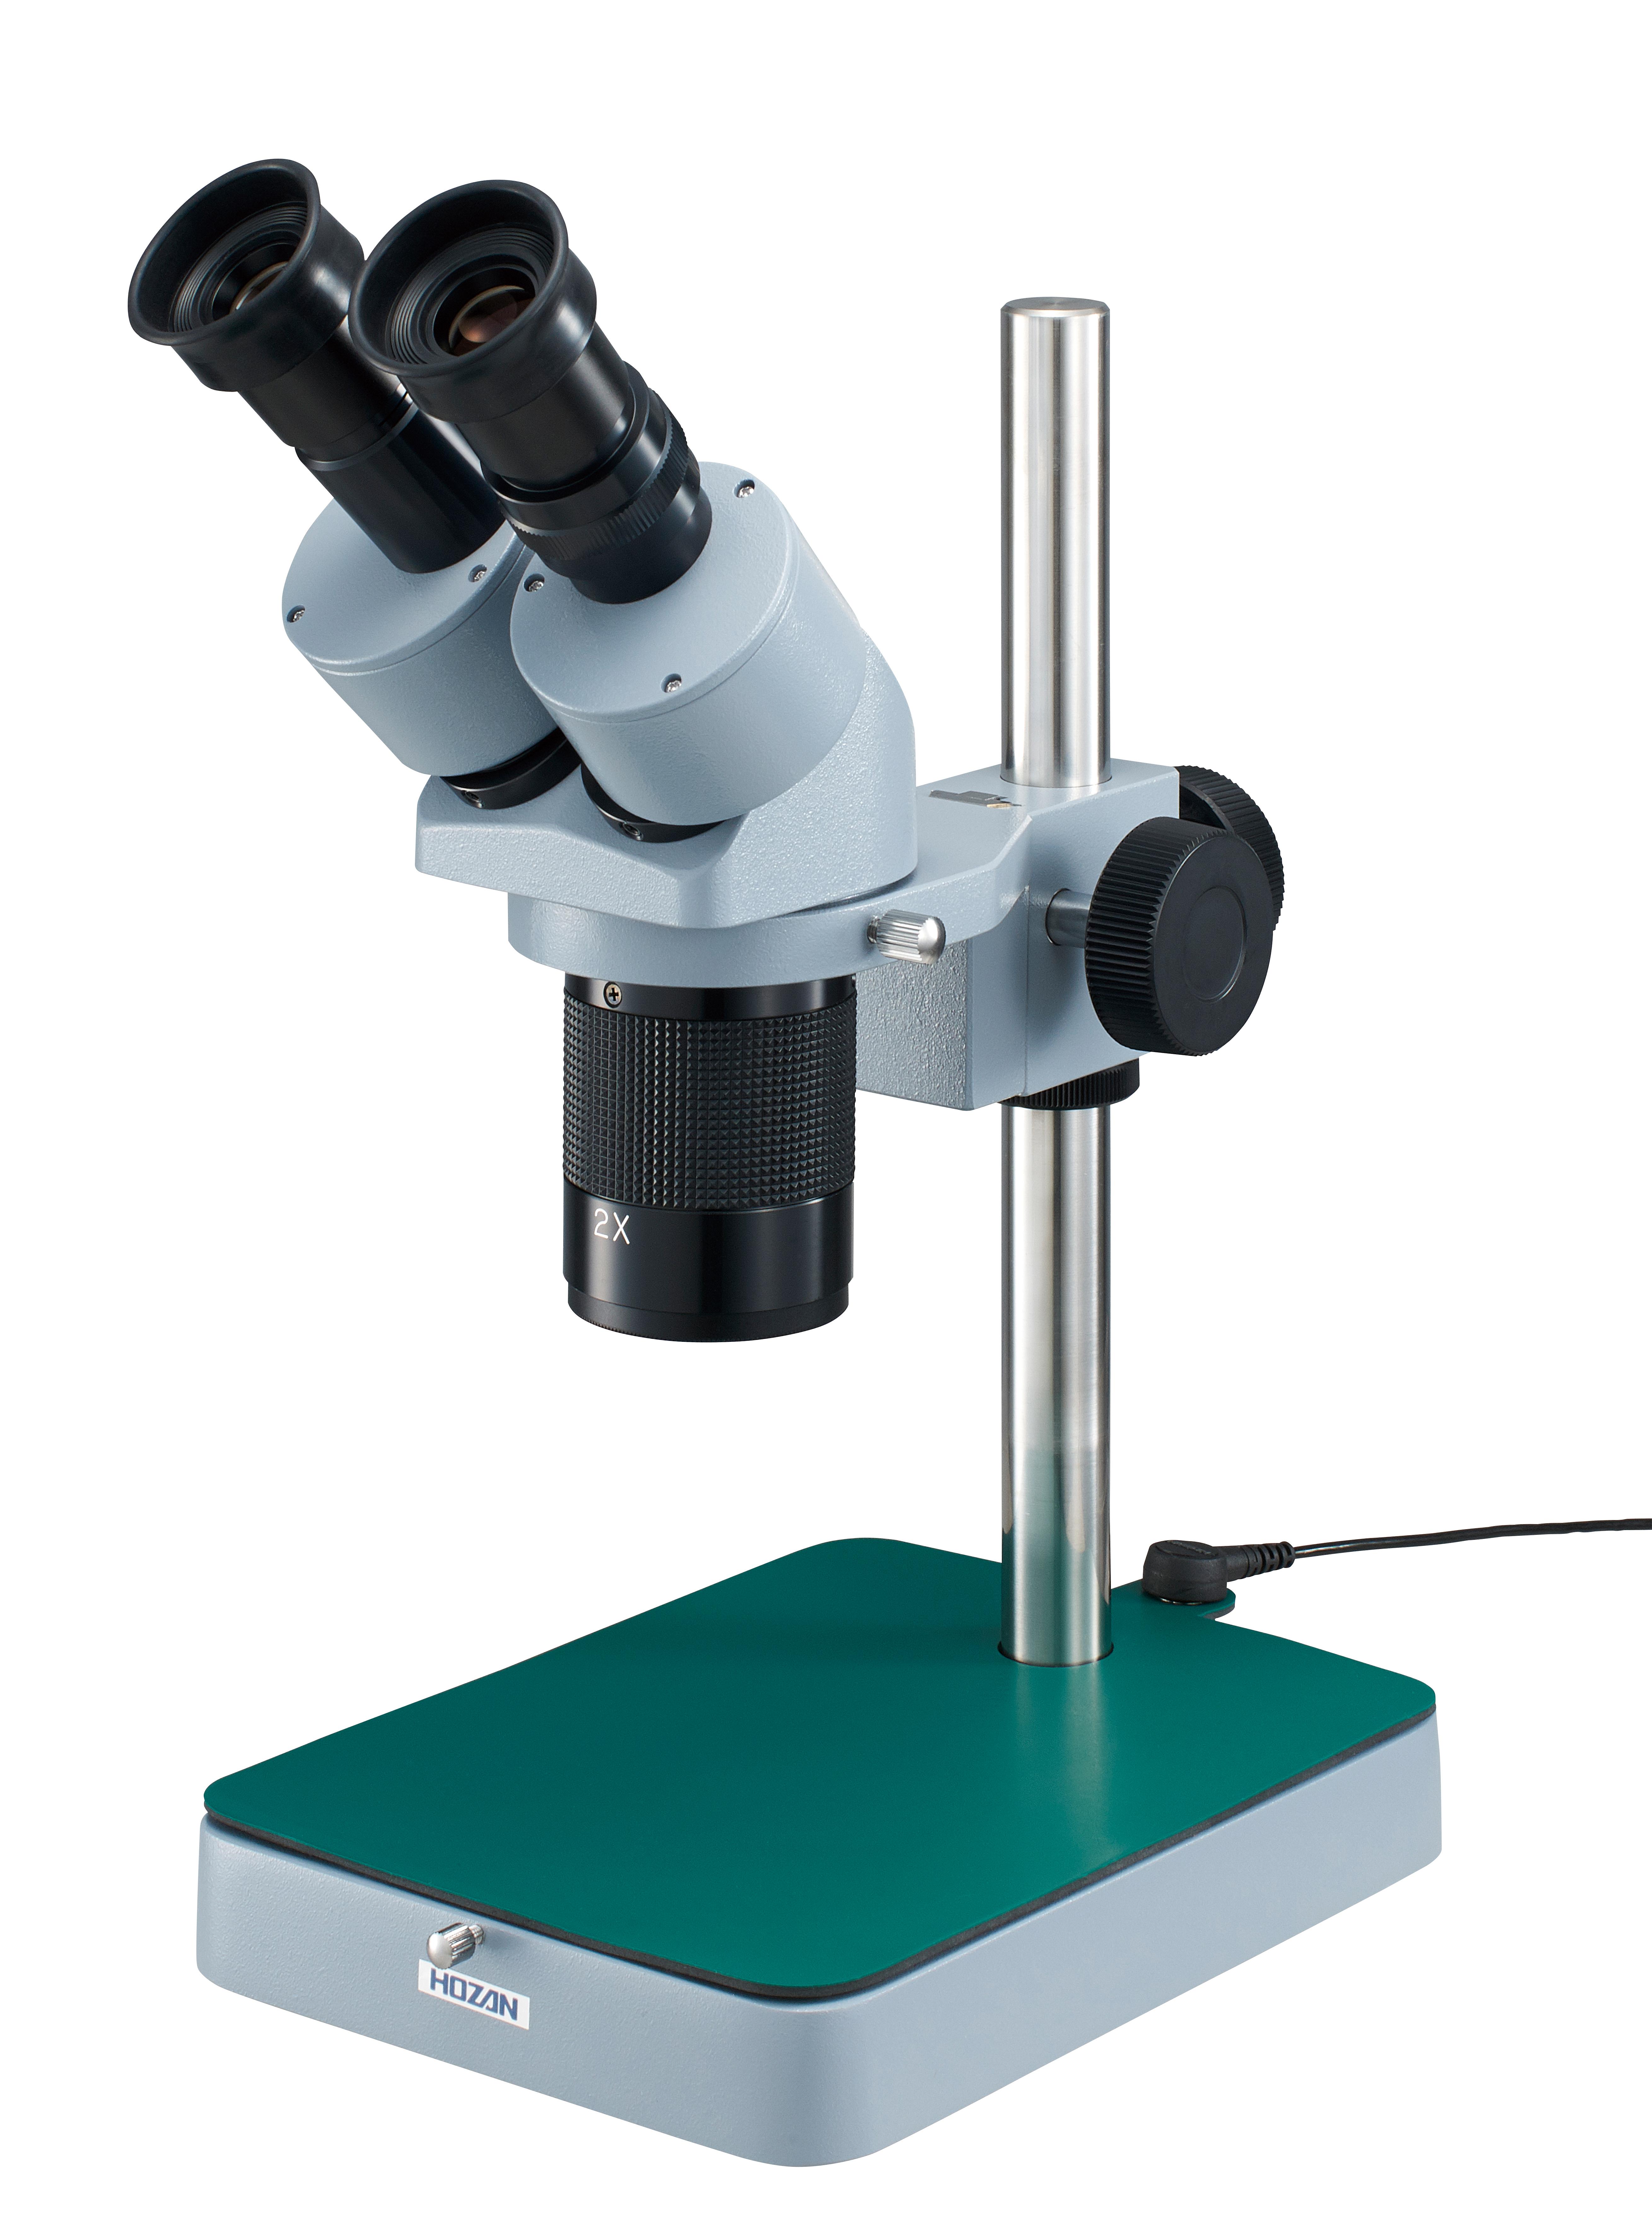 Stereo Microscope, L-50 (Hozan)